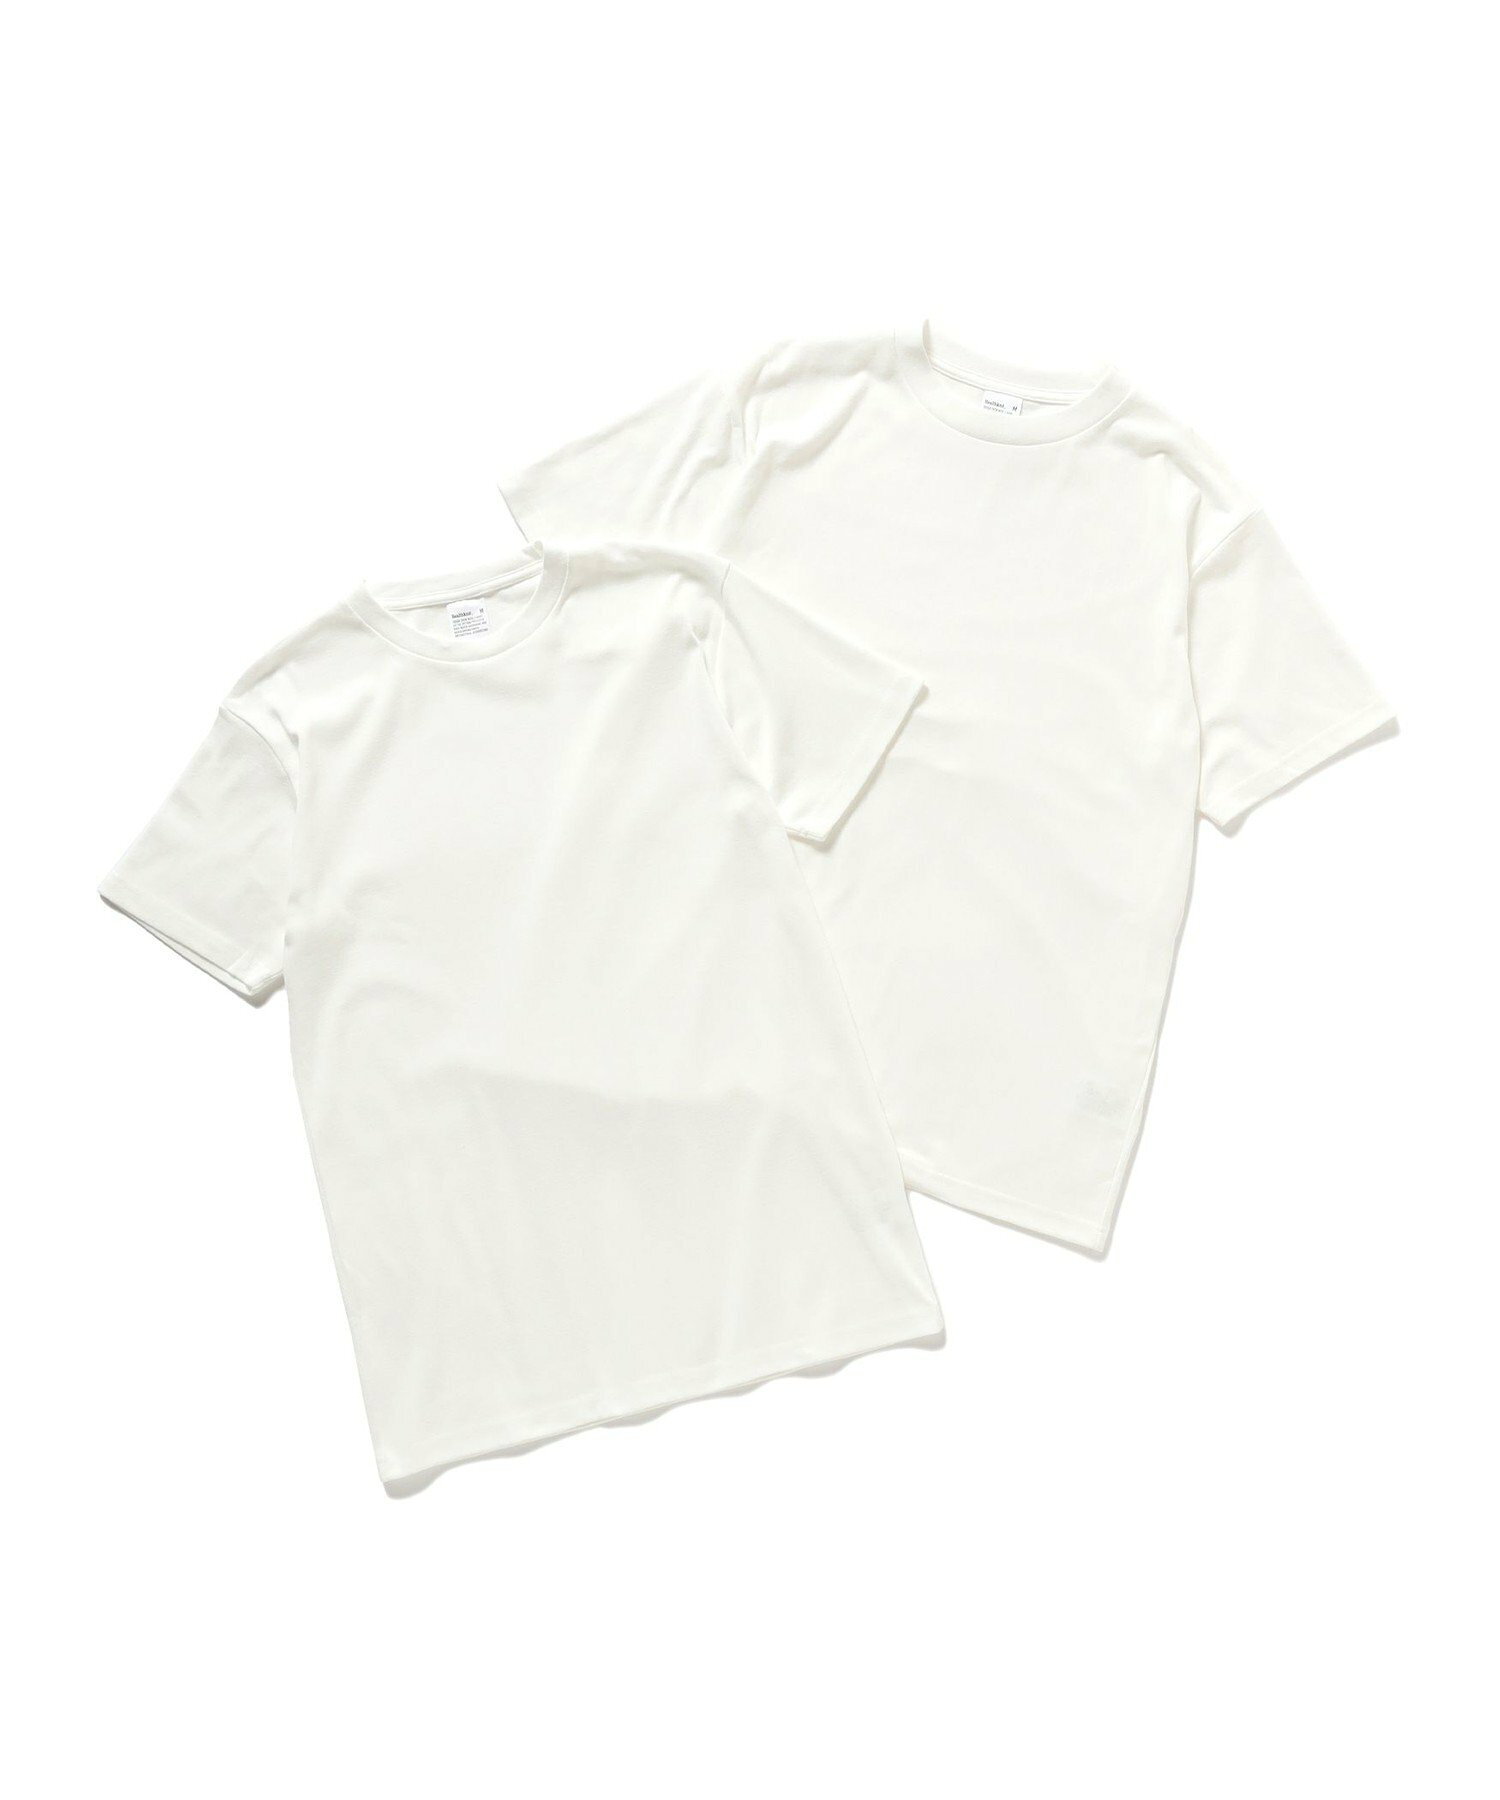 Healthknit / ミリタリー 2パック クルーネック  Tシャツ (天竺素材&フライス素材)